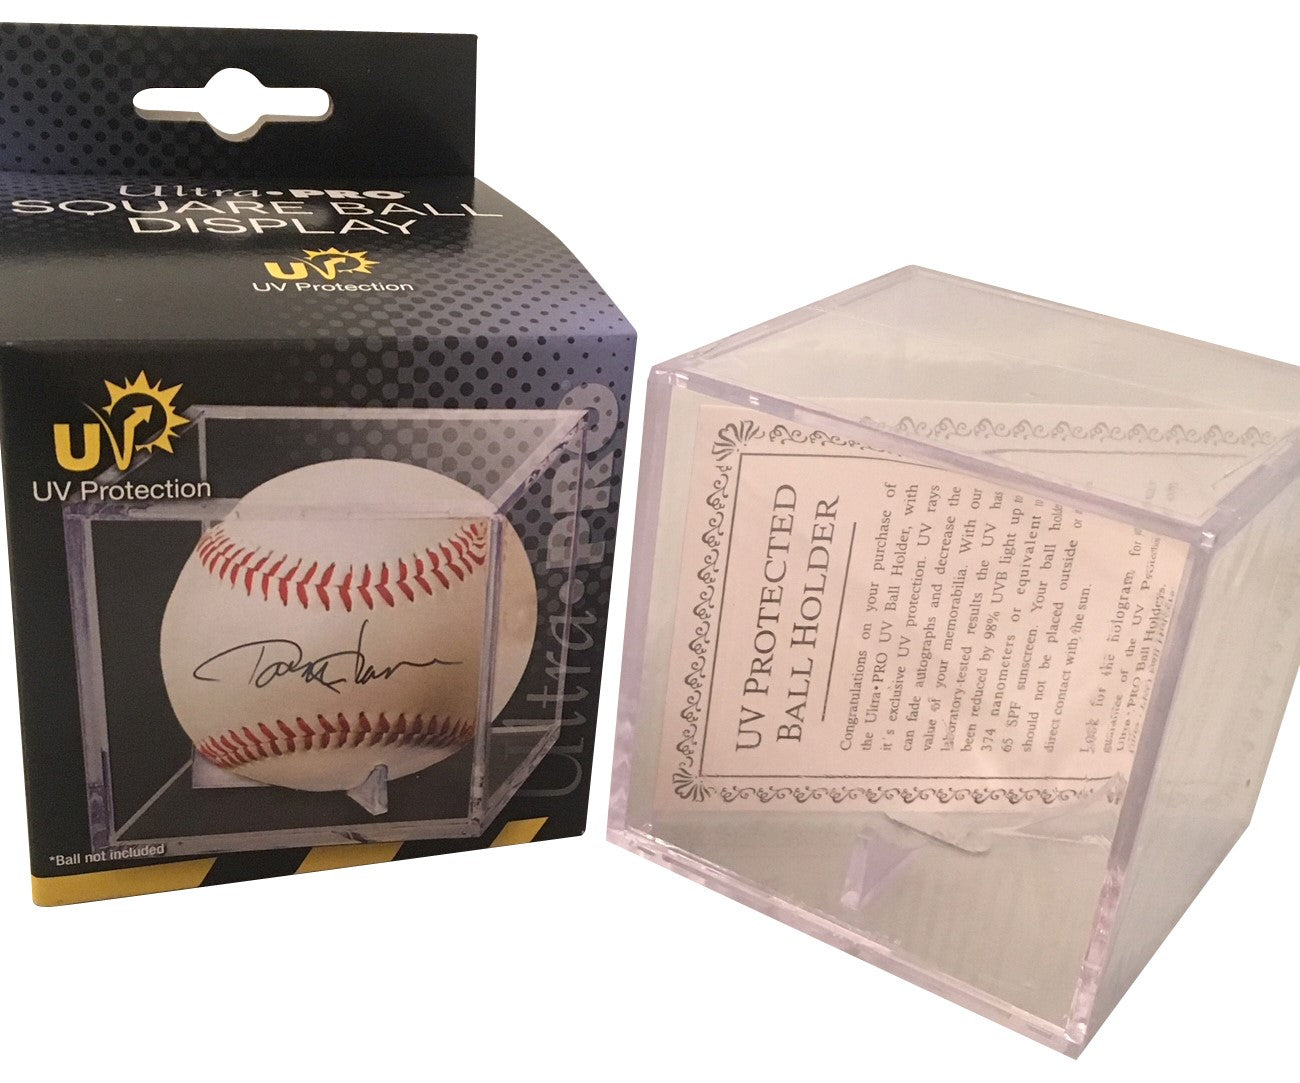 Jorge Posada Autographed 2009 World Series Signed Baseball JSA COA With UV Display Case-Powers Sports Memorabilia